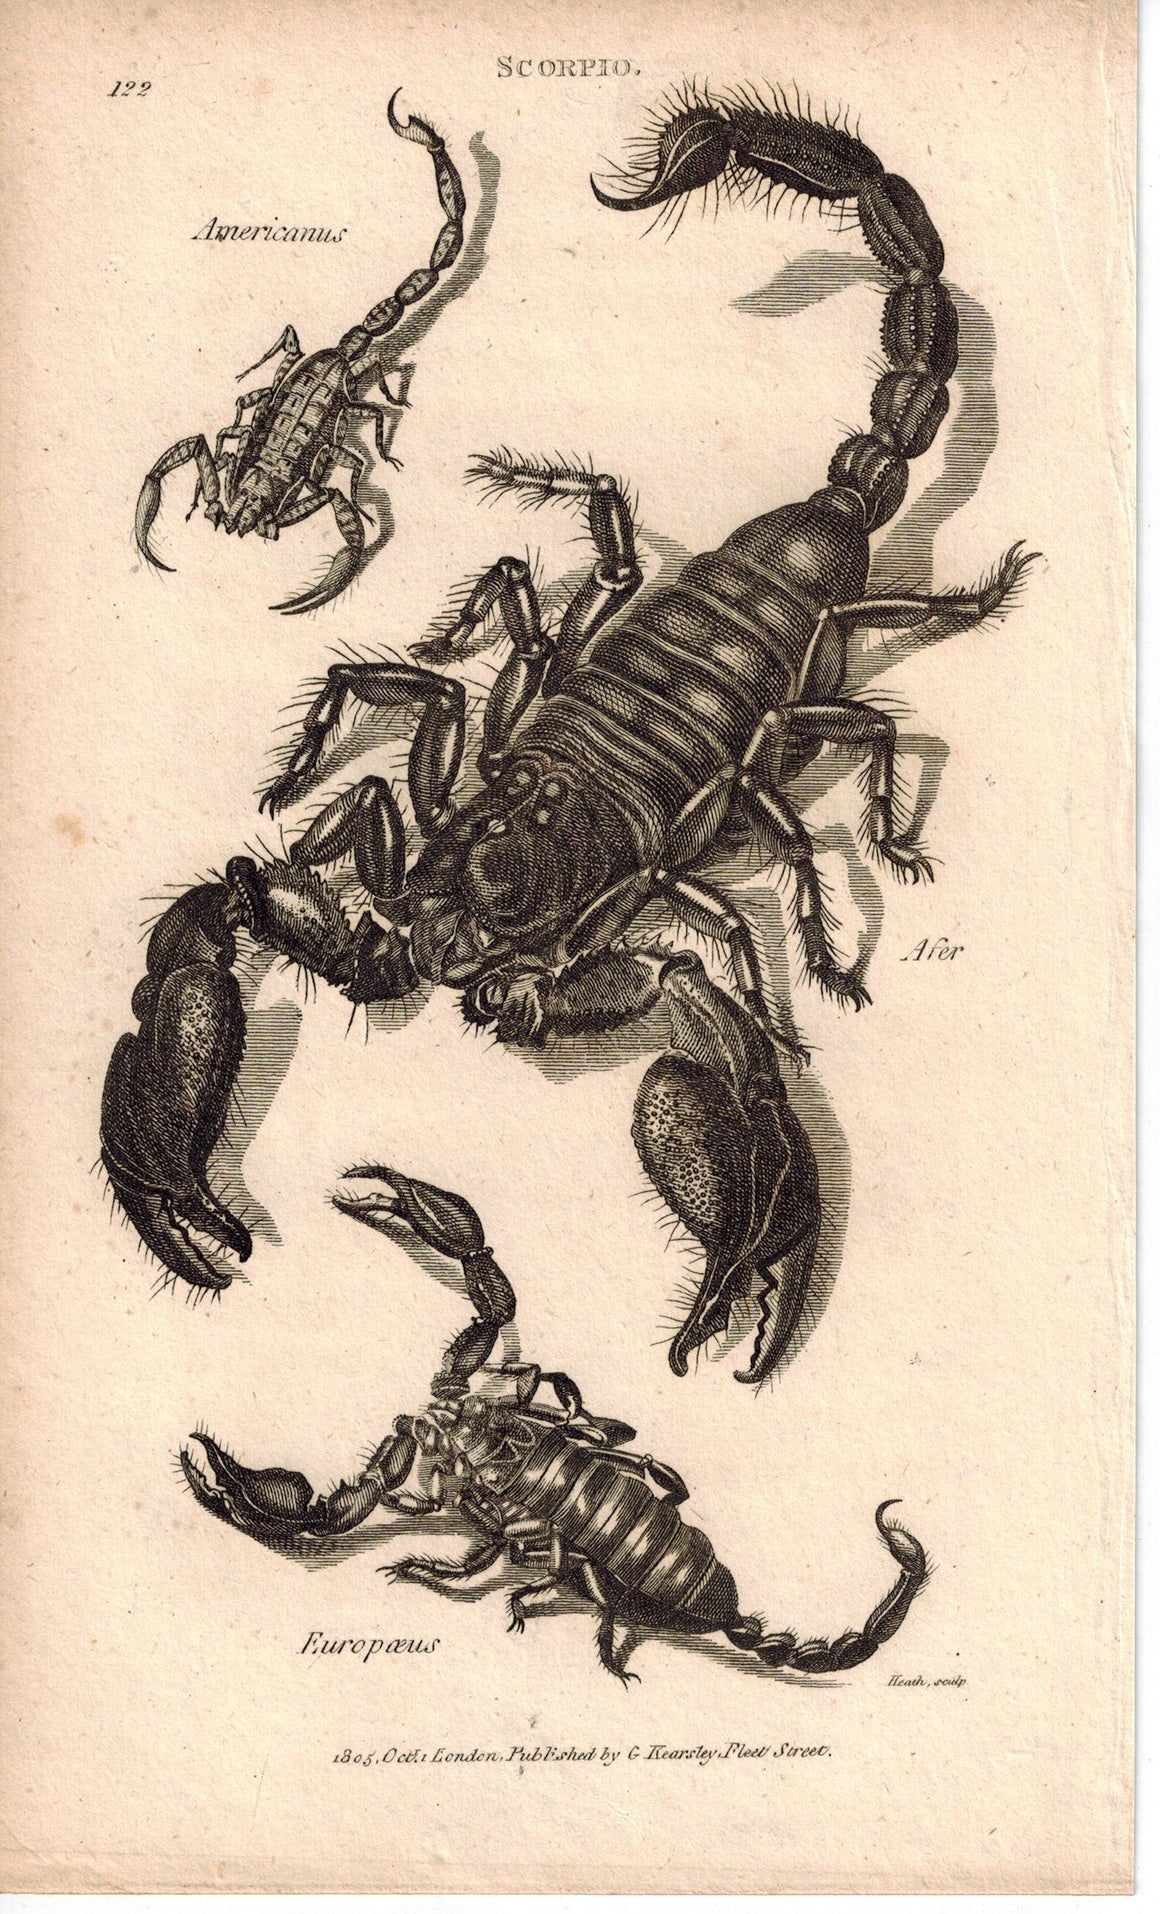 Scorpio Europaeus 1809 Original Antique Engraving Print by Shaw & Griffith